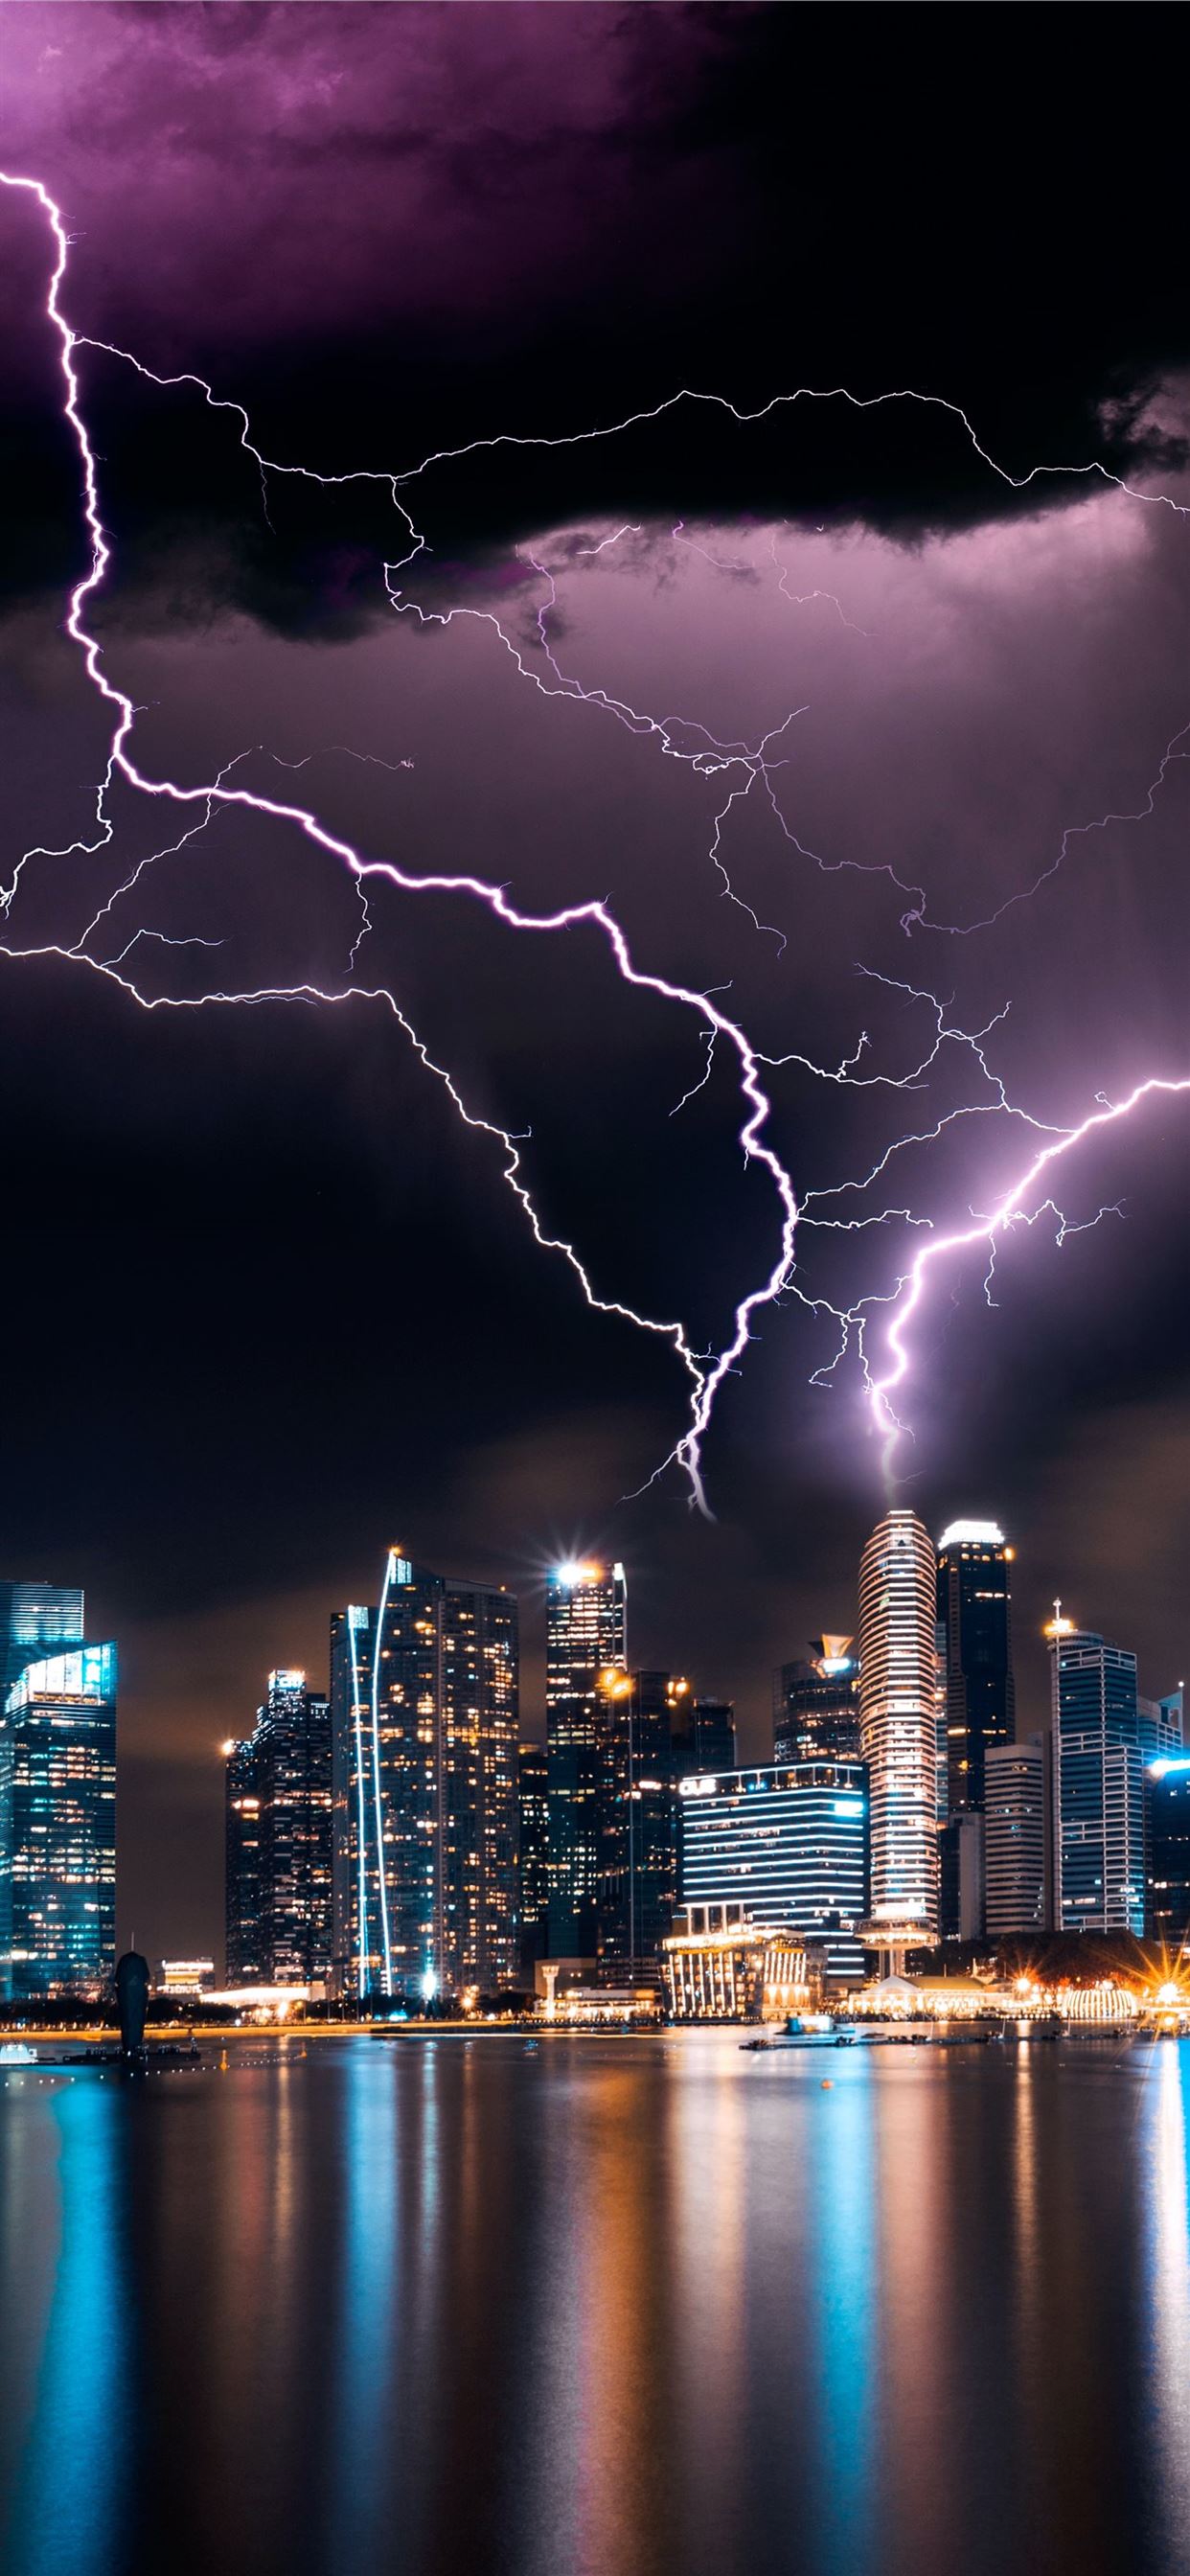 lightning storm over skyscrapers iPhone X Wallpaper Free Download